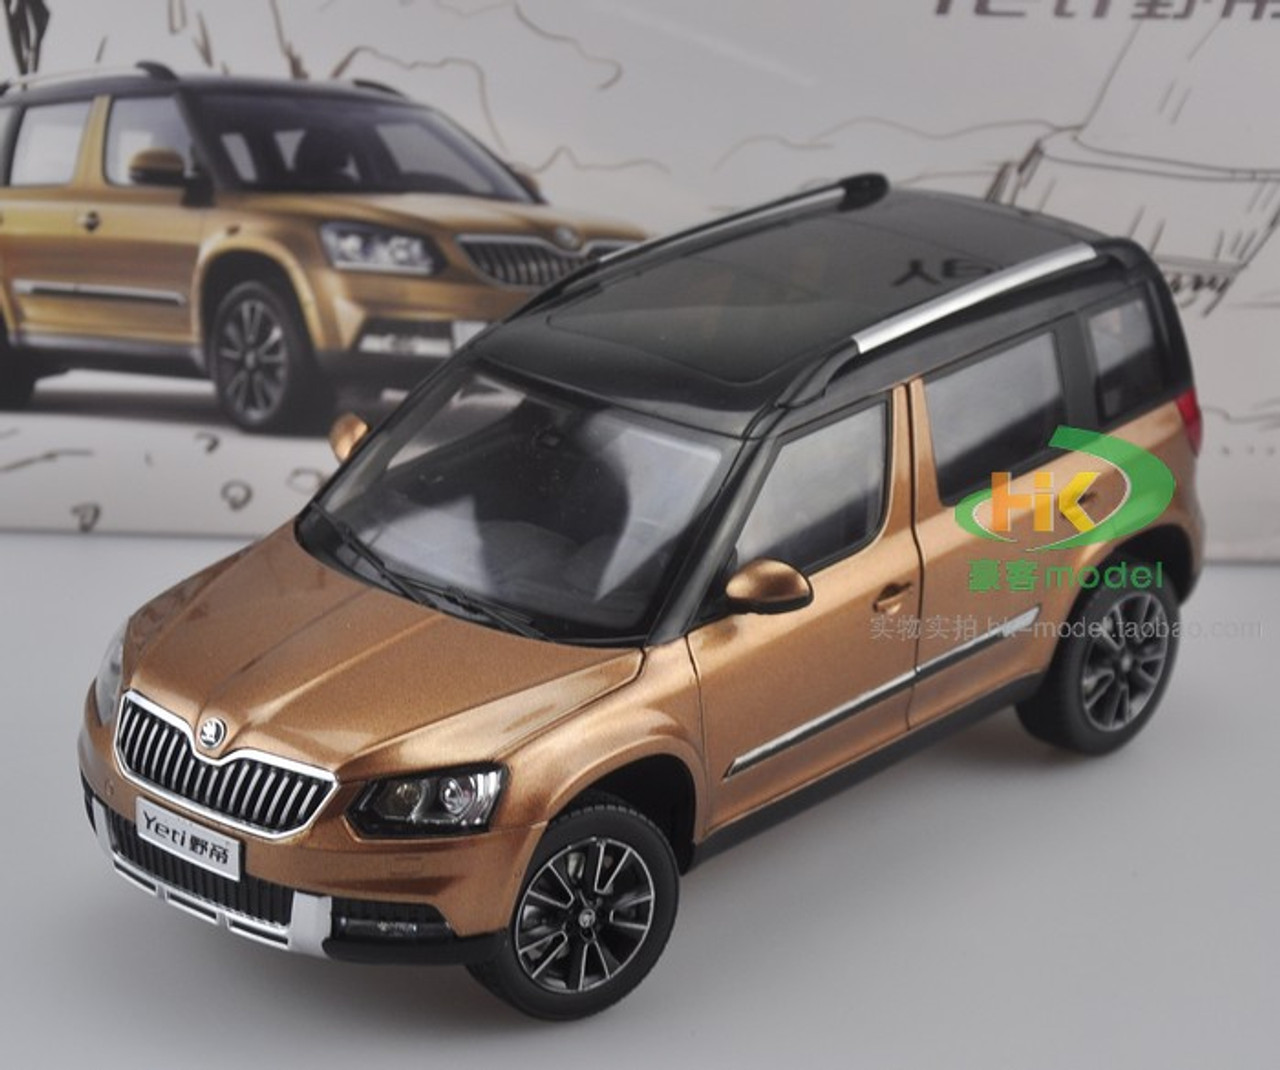 1/18 Dealer Edition Skoda Yeti (Golden/Brown) Diecast Car Model